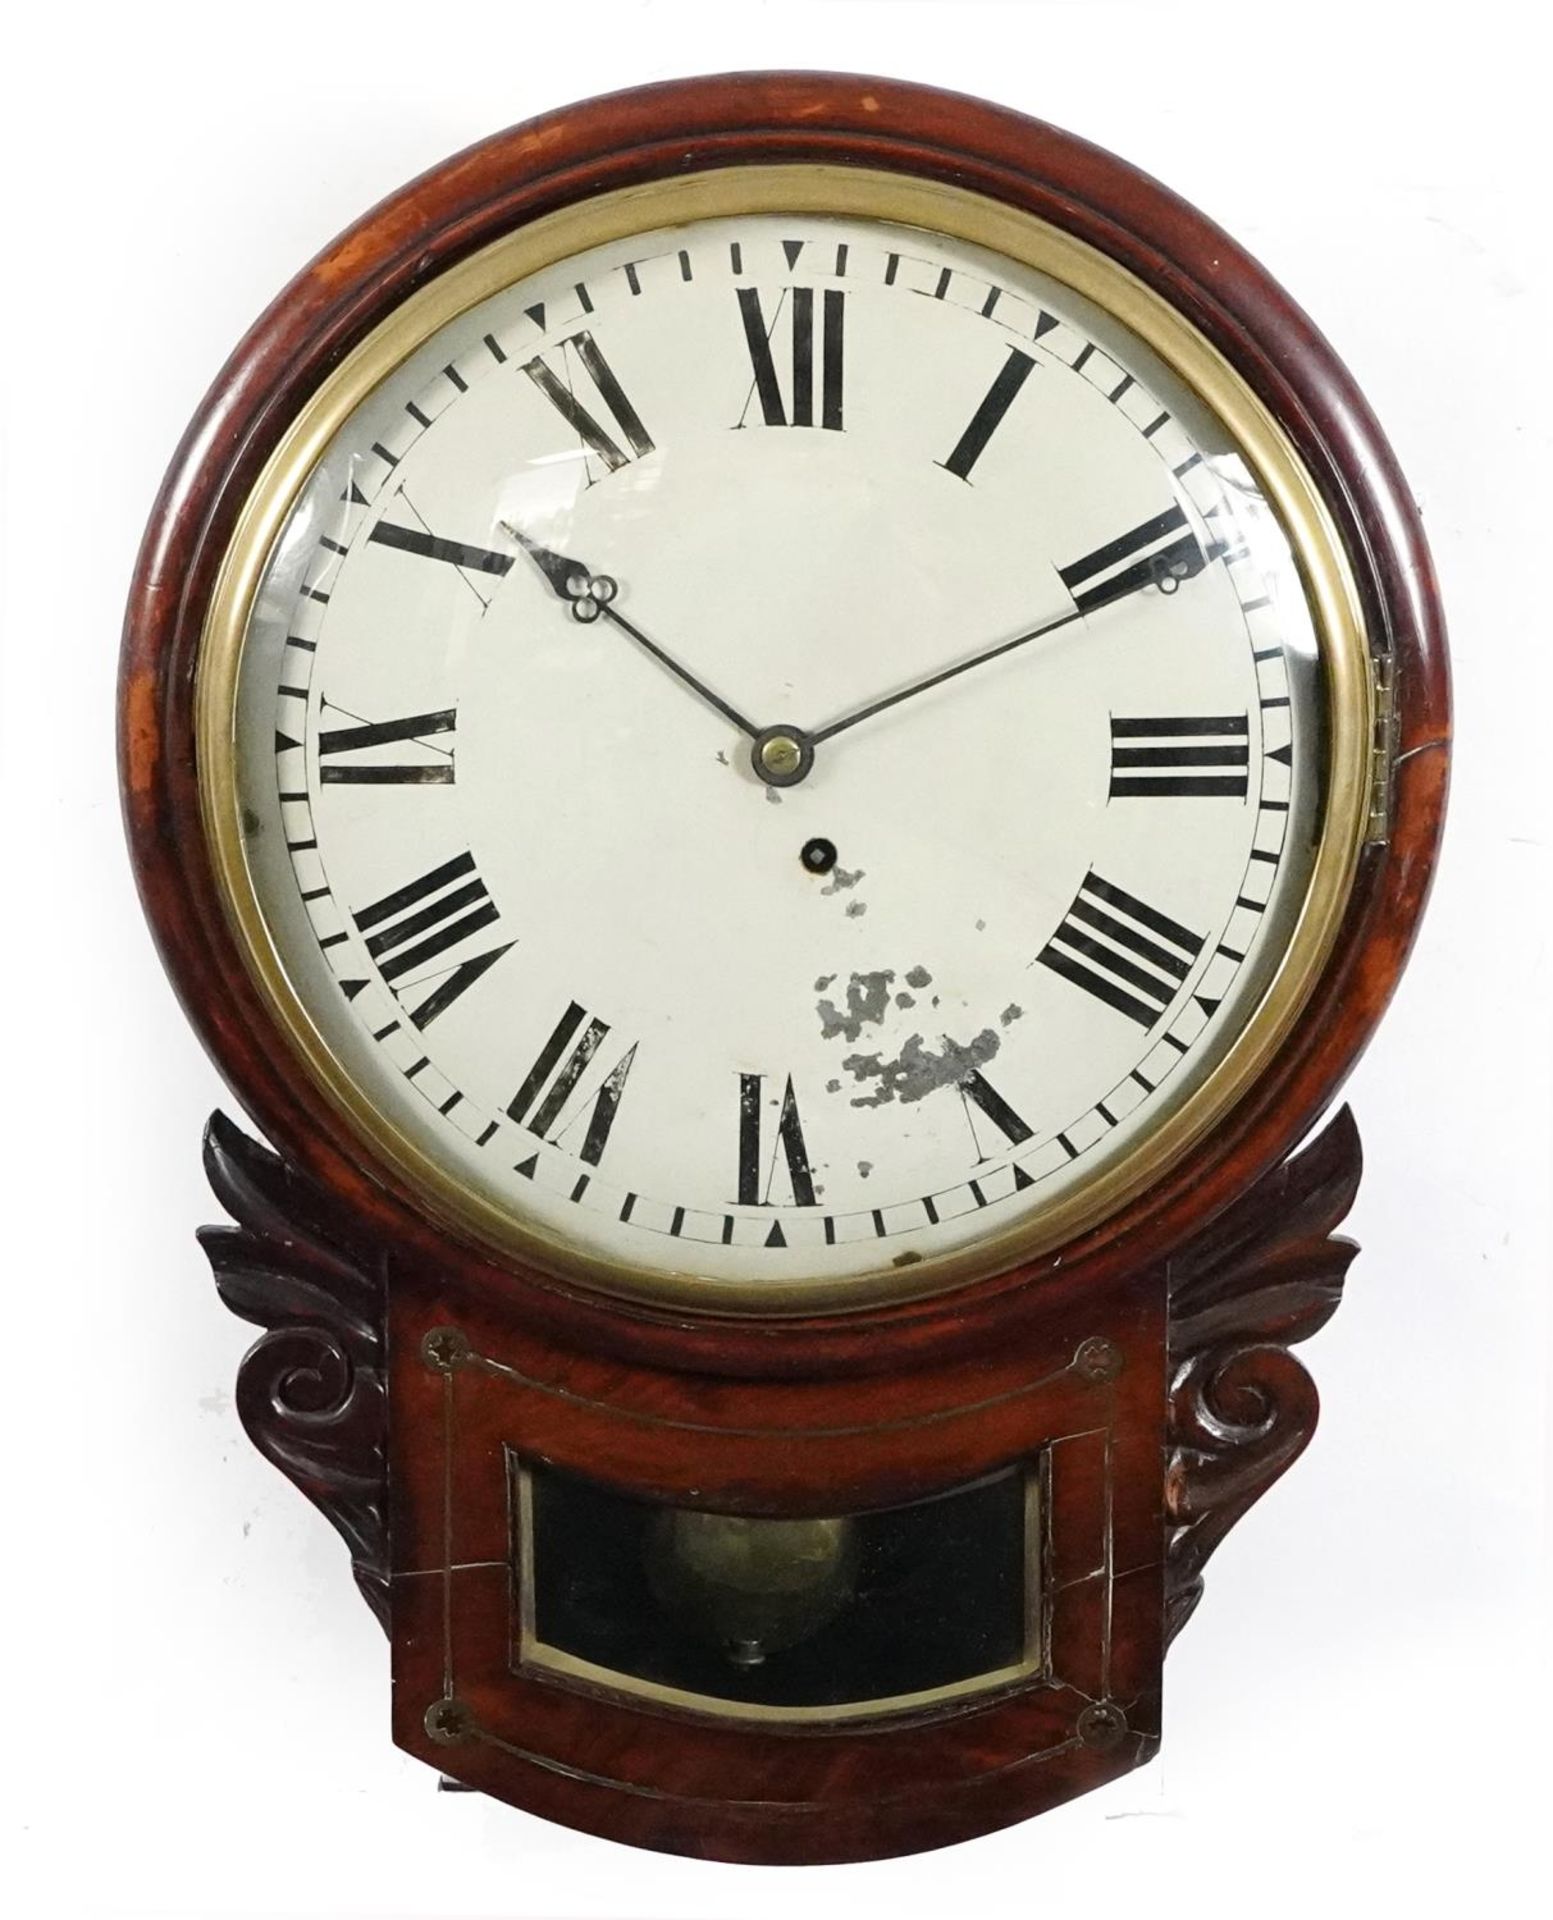 19th century mahogany drop dial fusee wall clock with brass inlay and circular dial having painted